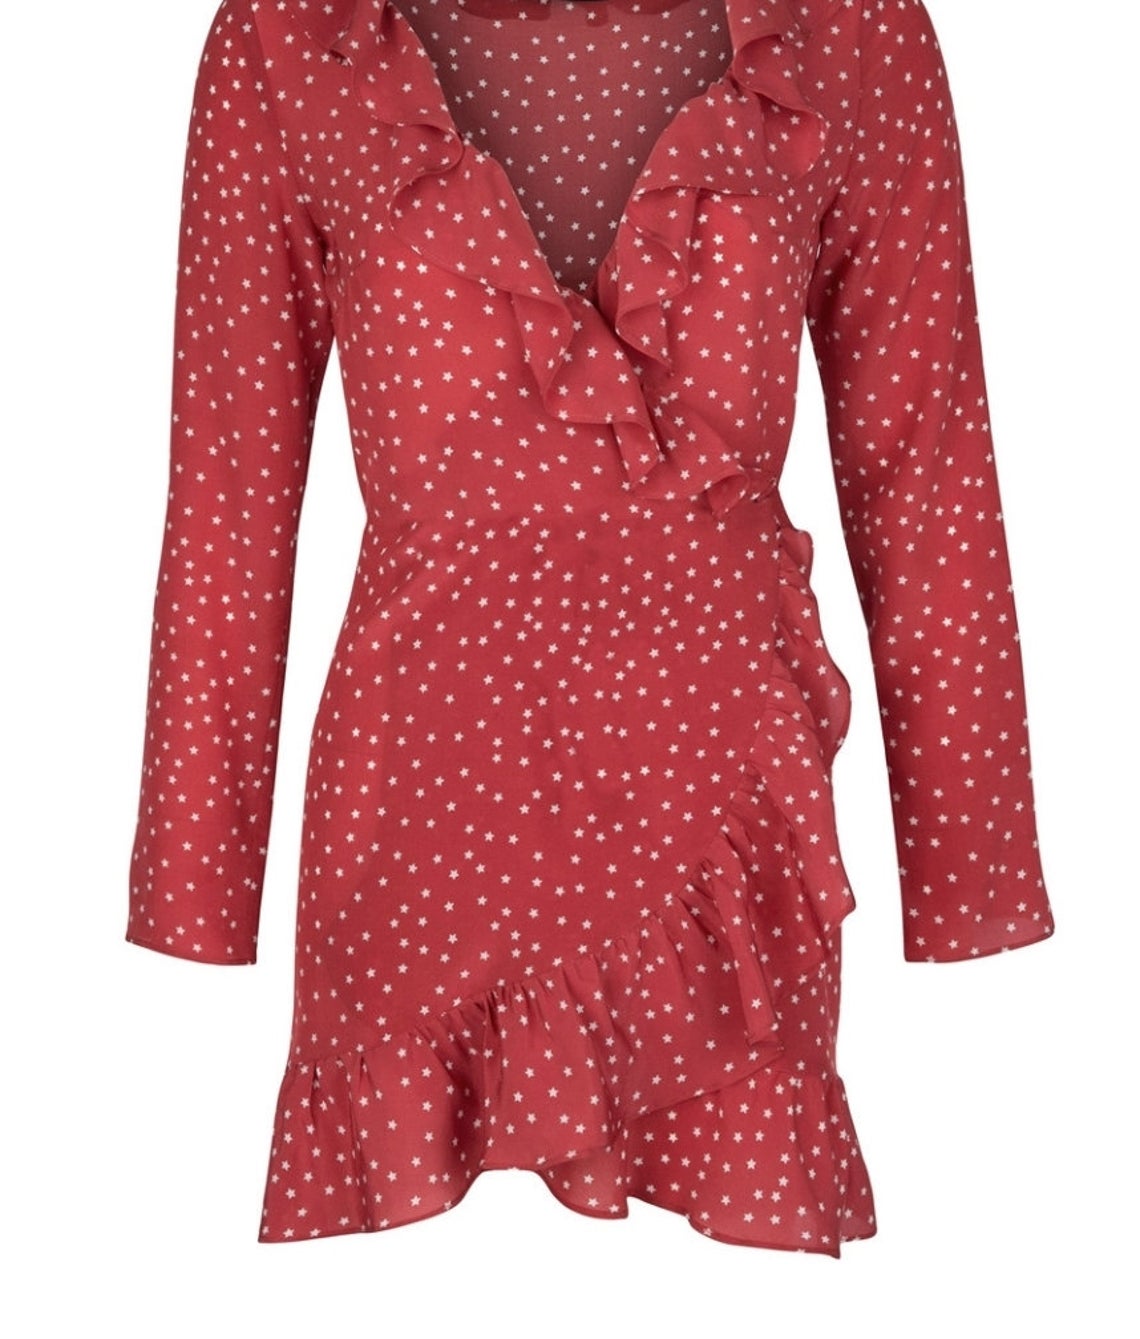 Nonothing | Women's 100% silk wrap dress in red polka dot